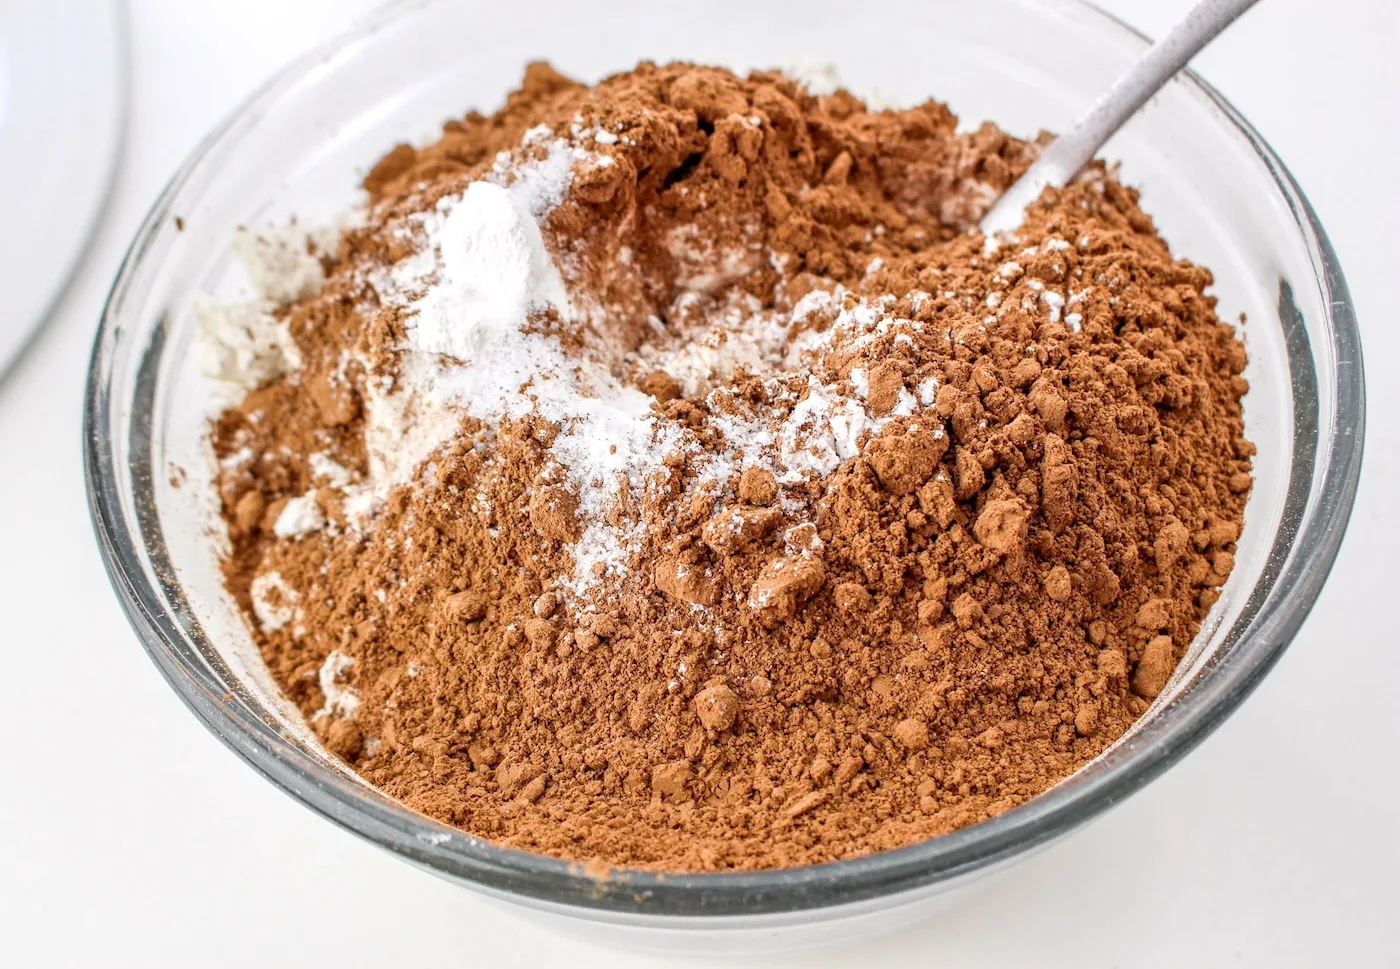 whisking together flour, cocoa powder, salt, and baking powder